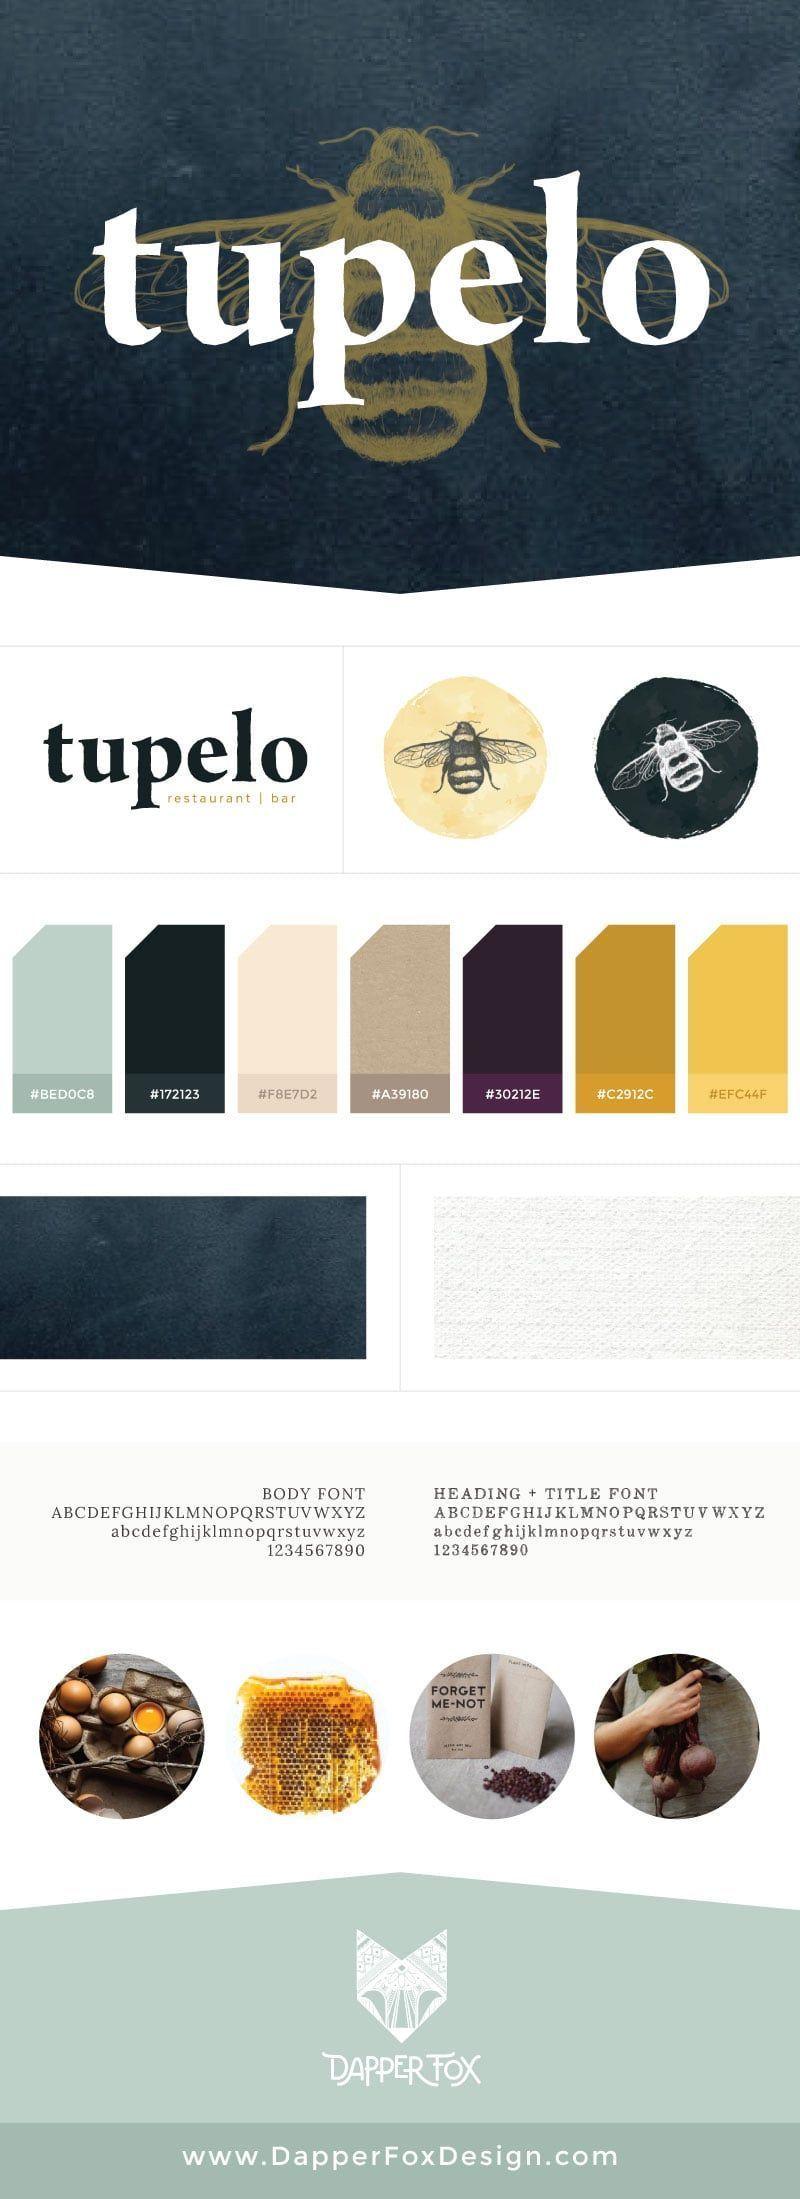 Purple and Green Restaurant Logo - Restaurant Style Guide for Tupelo Park City by Dapper Fox Design ...